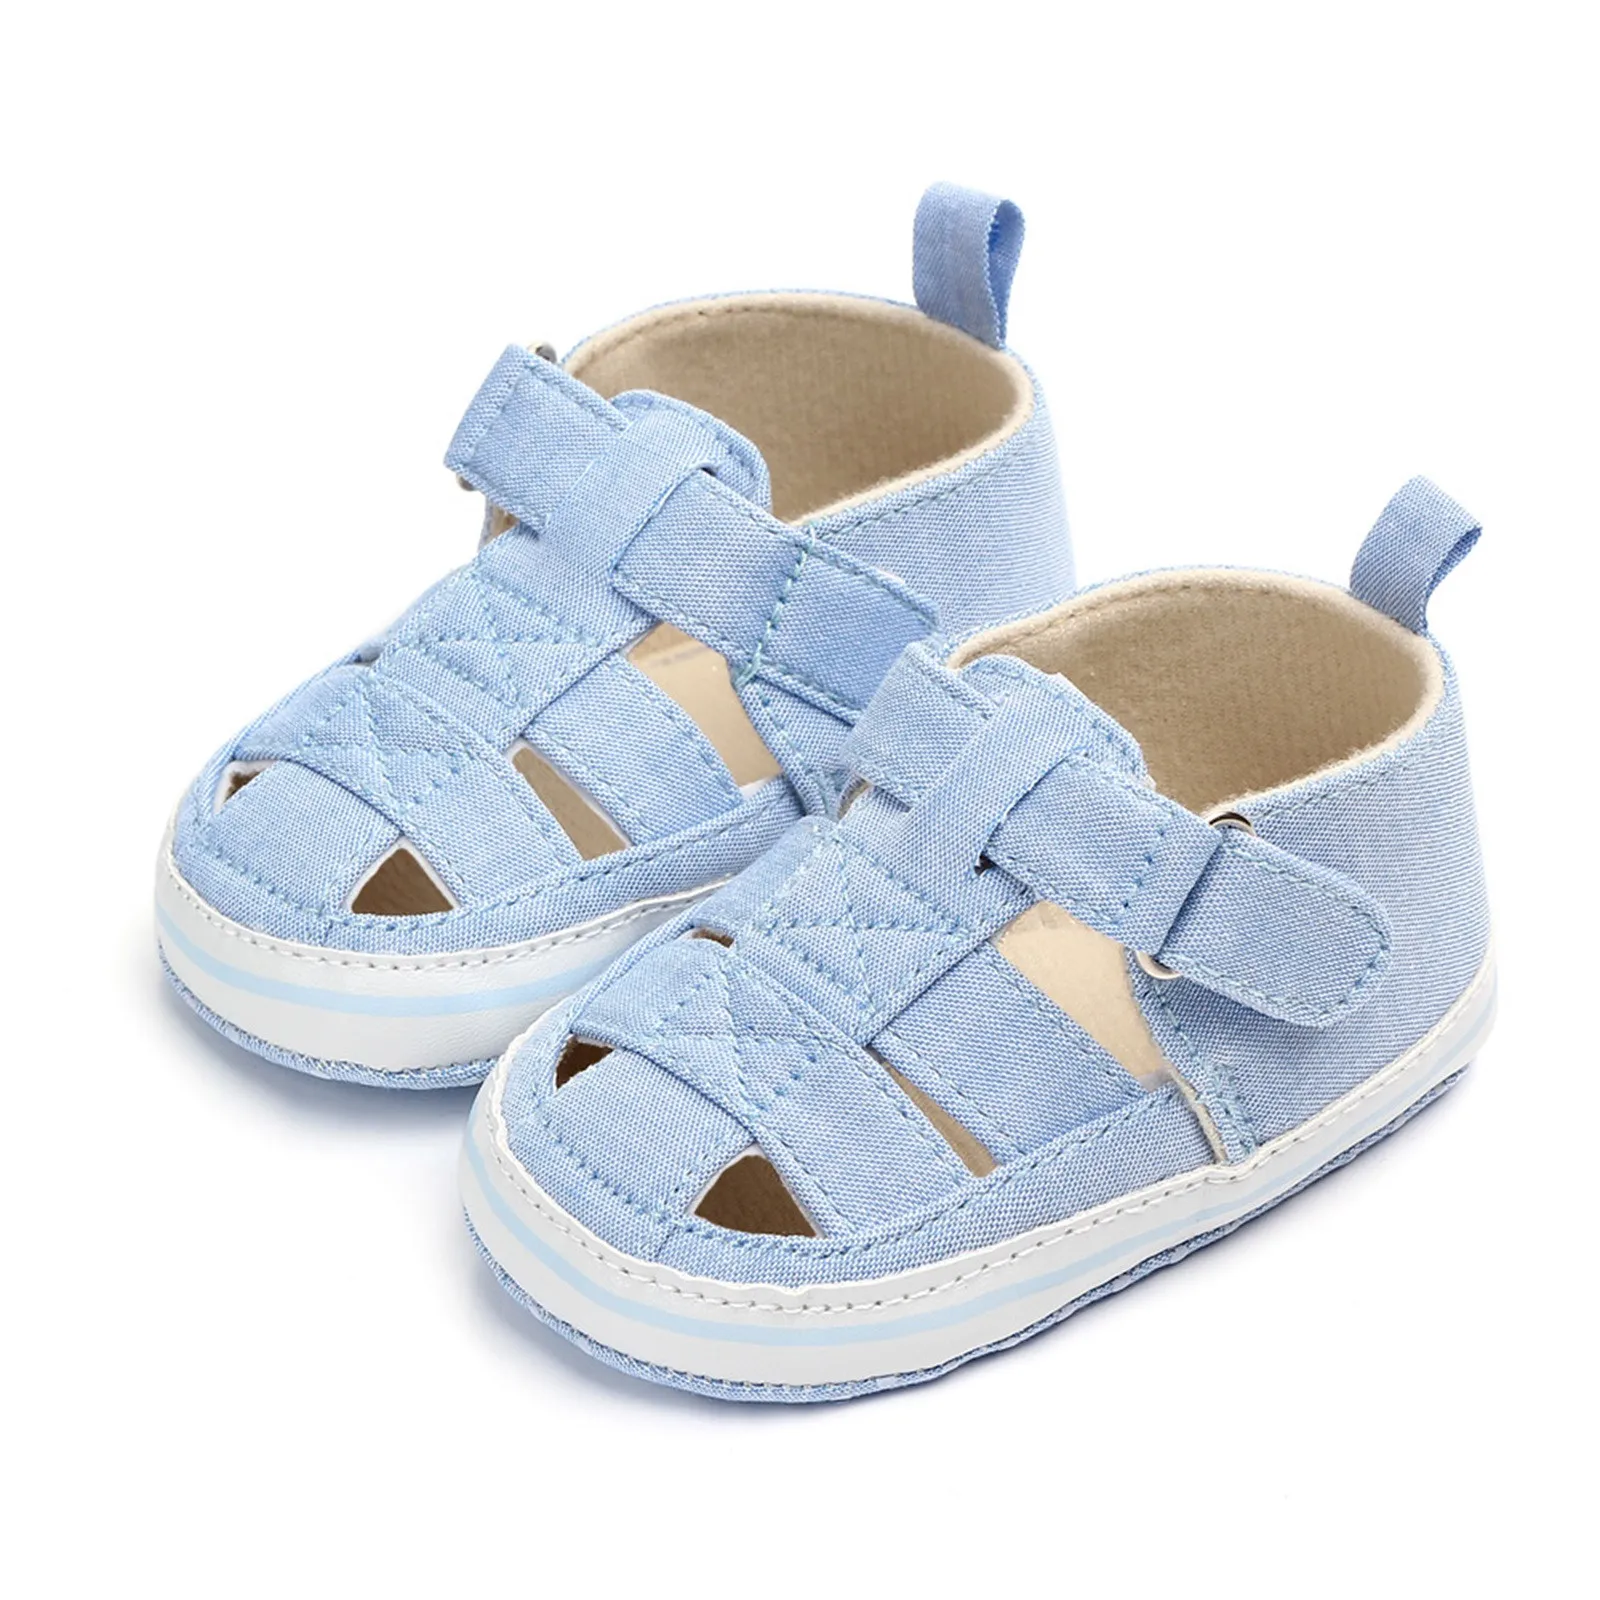 TAREYKA Baby Boys Girls Sandals Soft Sole Summer Infant Dress Shoes Anti Slip Rubber Sole Newborn Toddler Prewalker First Walking Shoes 